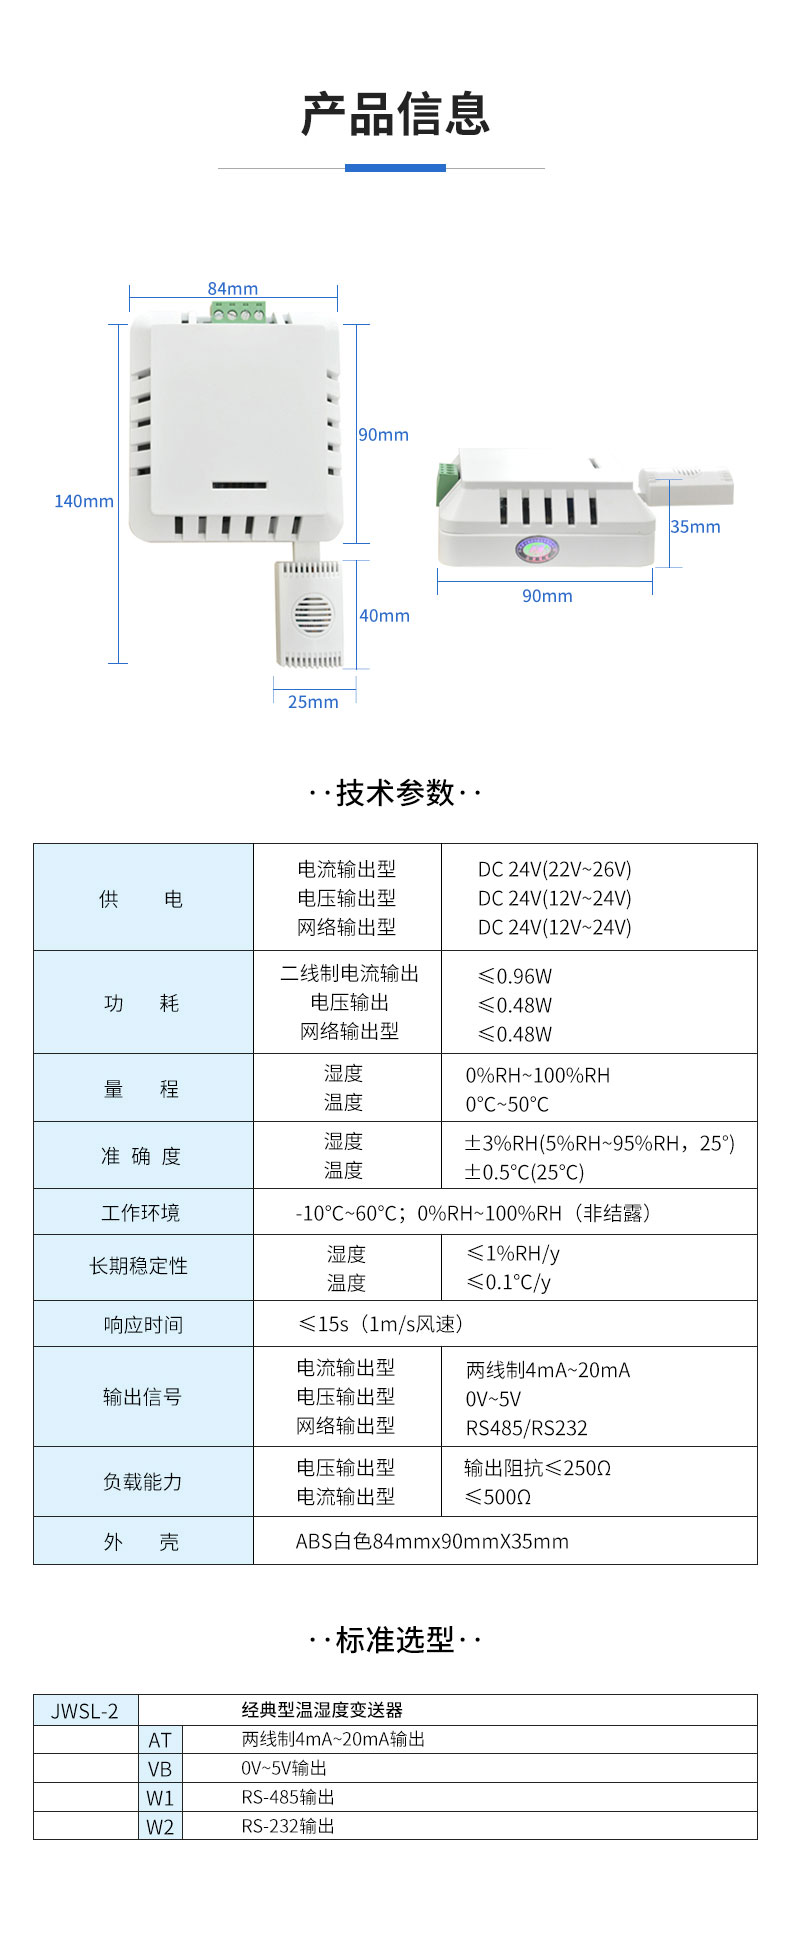 JWSL-2系列壁挂型(温湿度传感器)温湿度变送器供货商供应-北京昆仑邦达联合科技有限公司